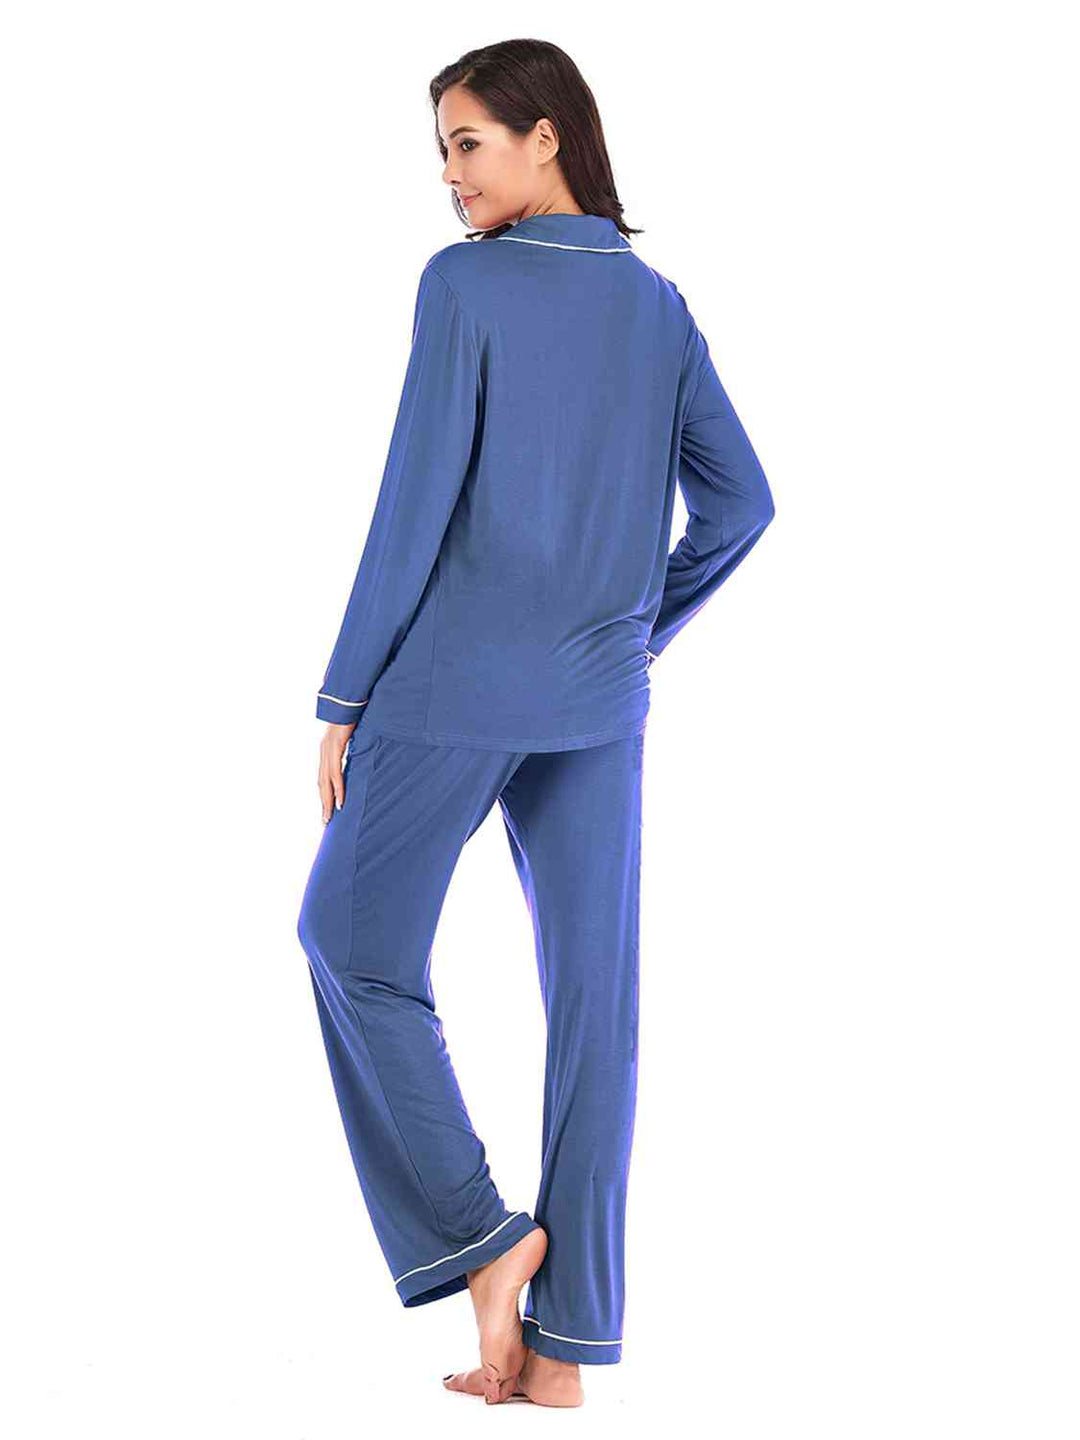 Collared Neck Long Sleeve Loungewear Set with Pockets - bertofonsi